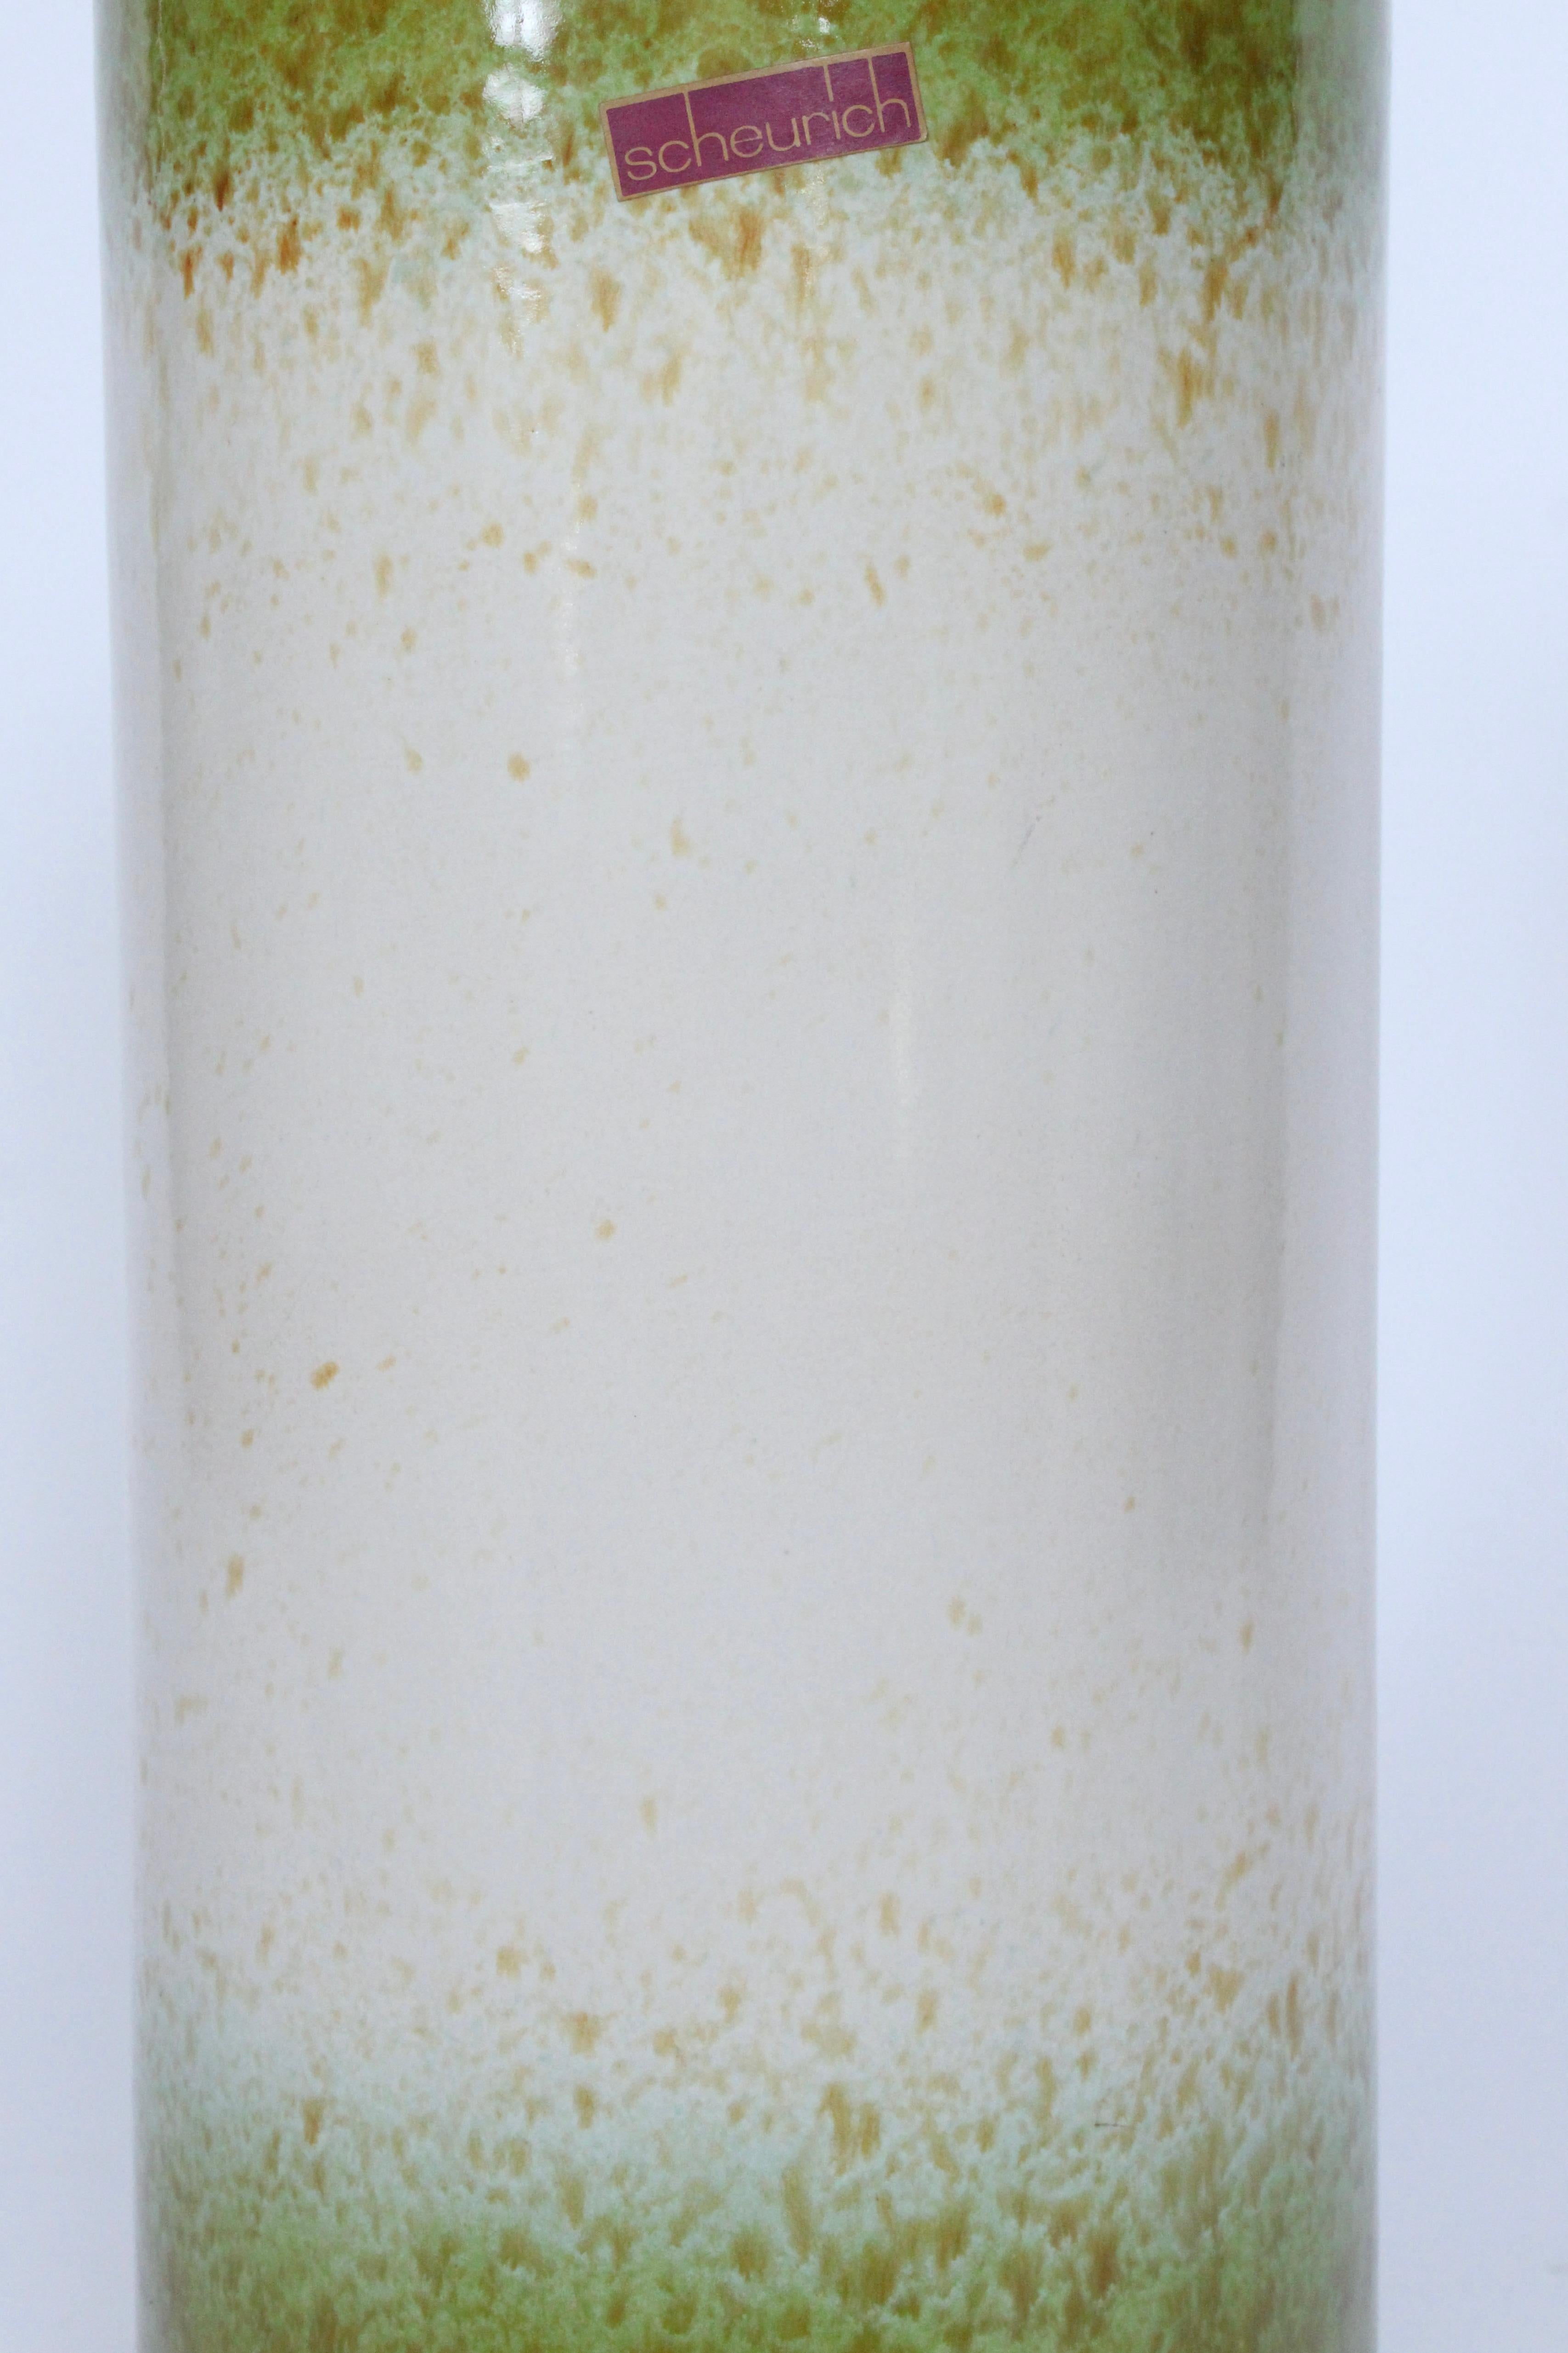 Mid-20th Century Larger Sheurlich Keramik Spring Green & Oatmeal Art Pottery Vase, 1950's